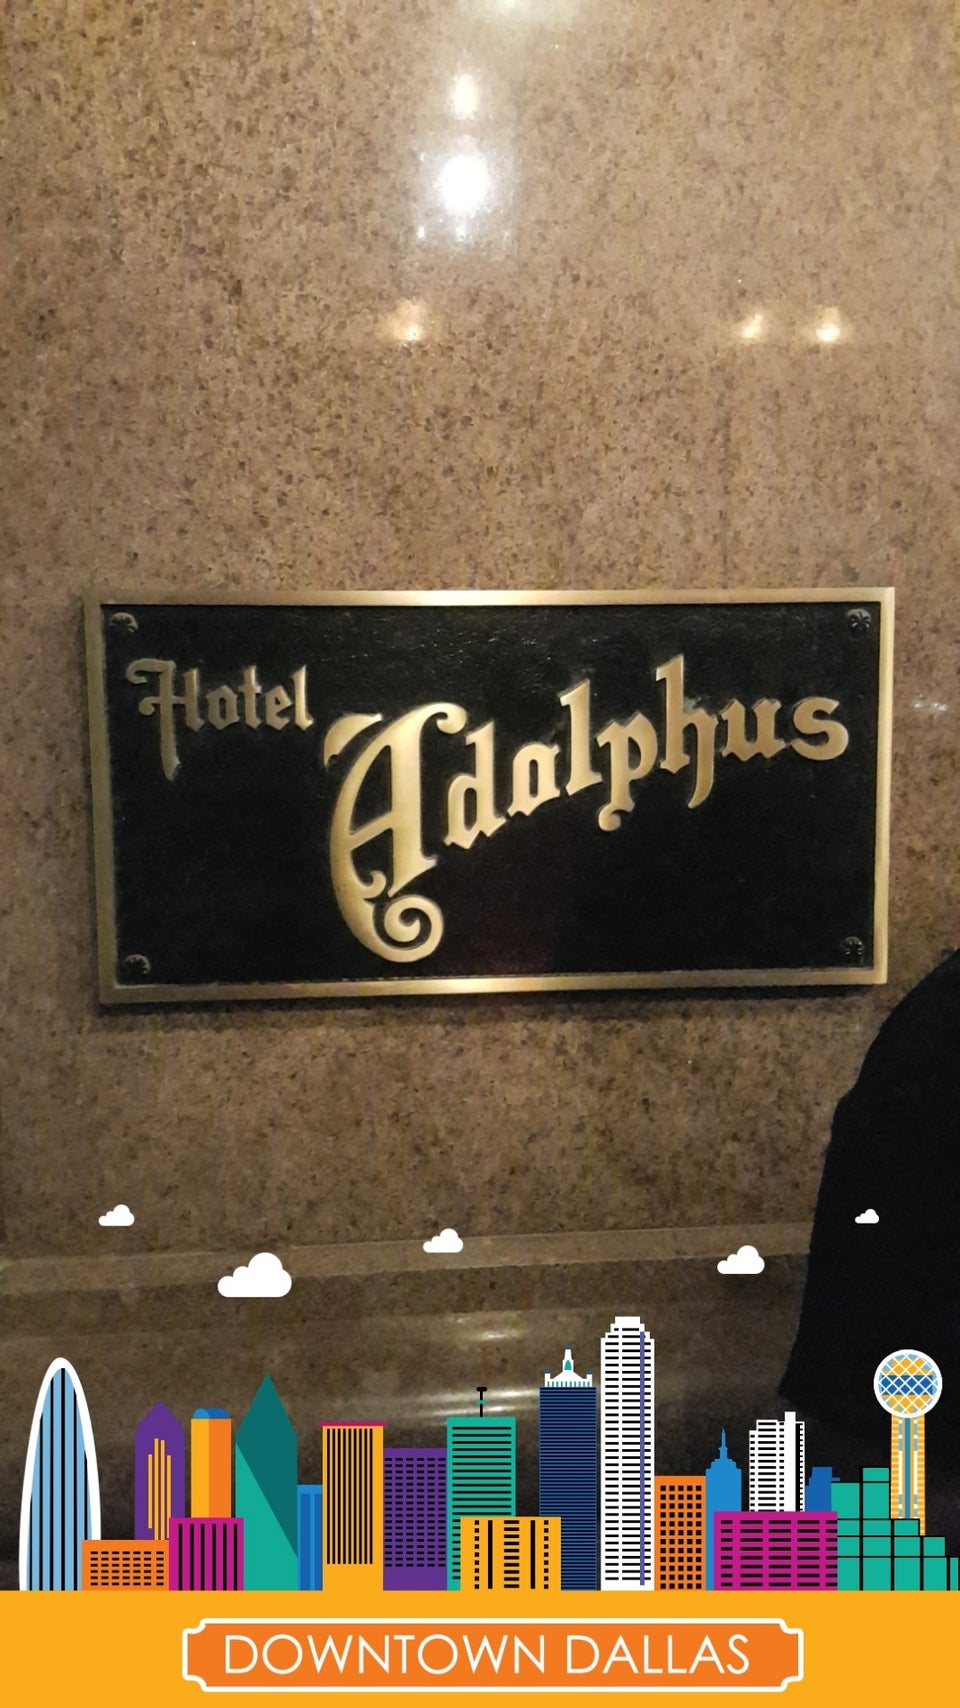 Photo of Adolphus Hotel